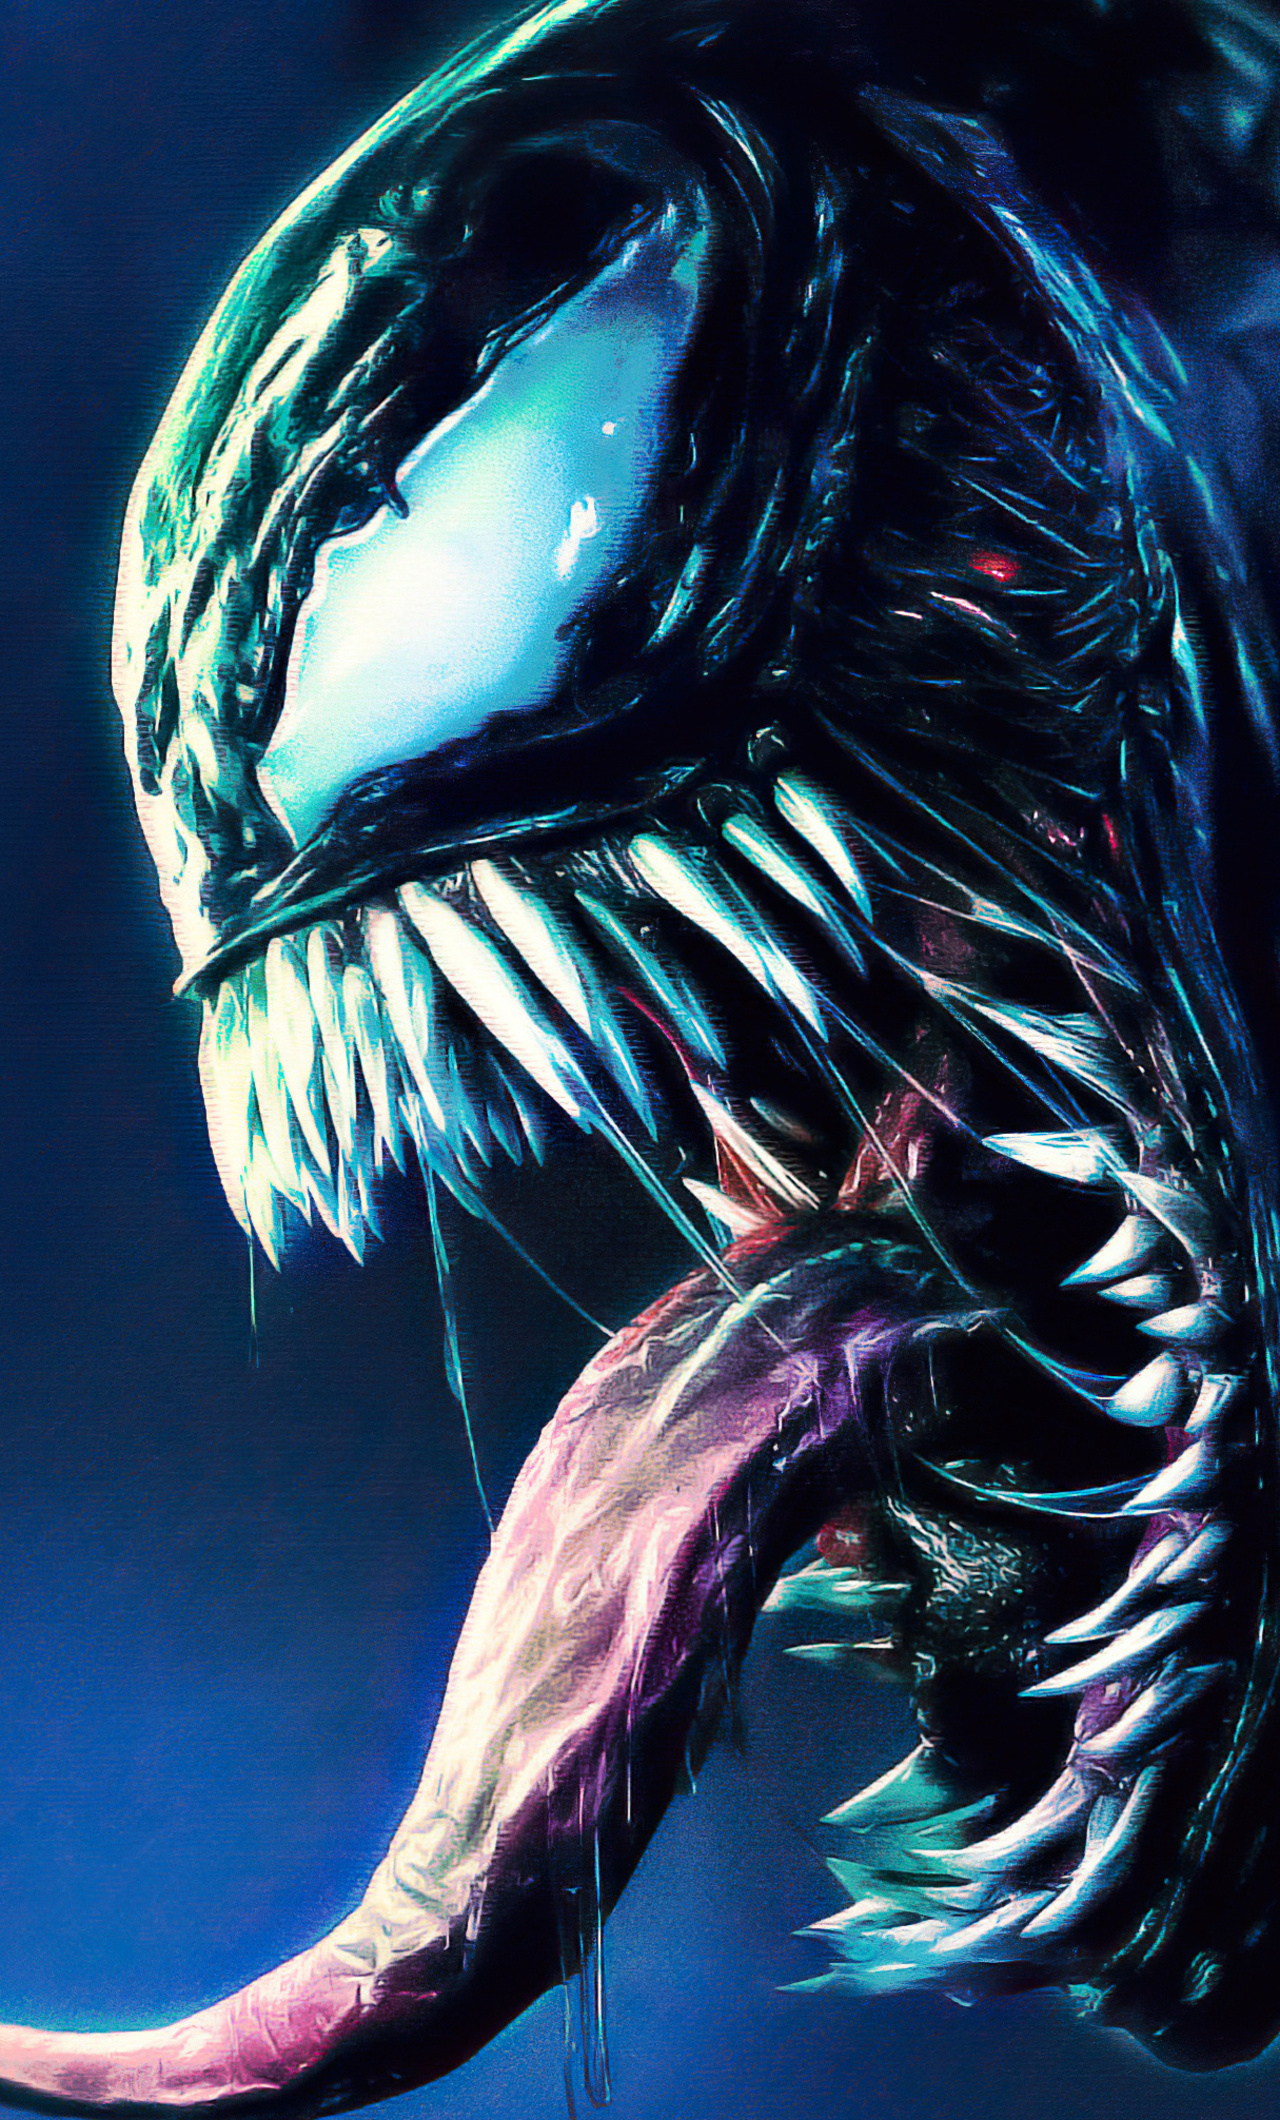 Alien Vs Venom iPhone HD 4k Wallpaper, Image, Background, Photo and Picture